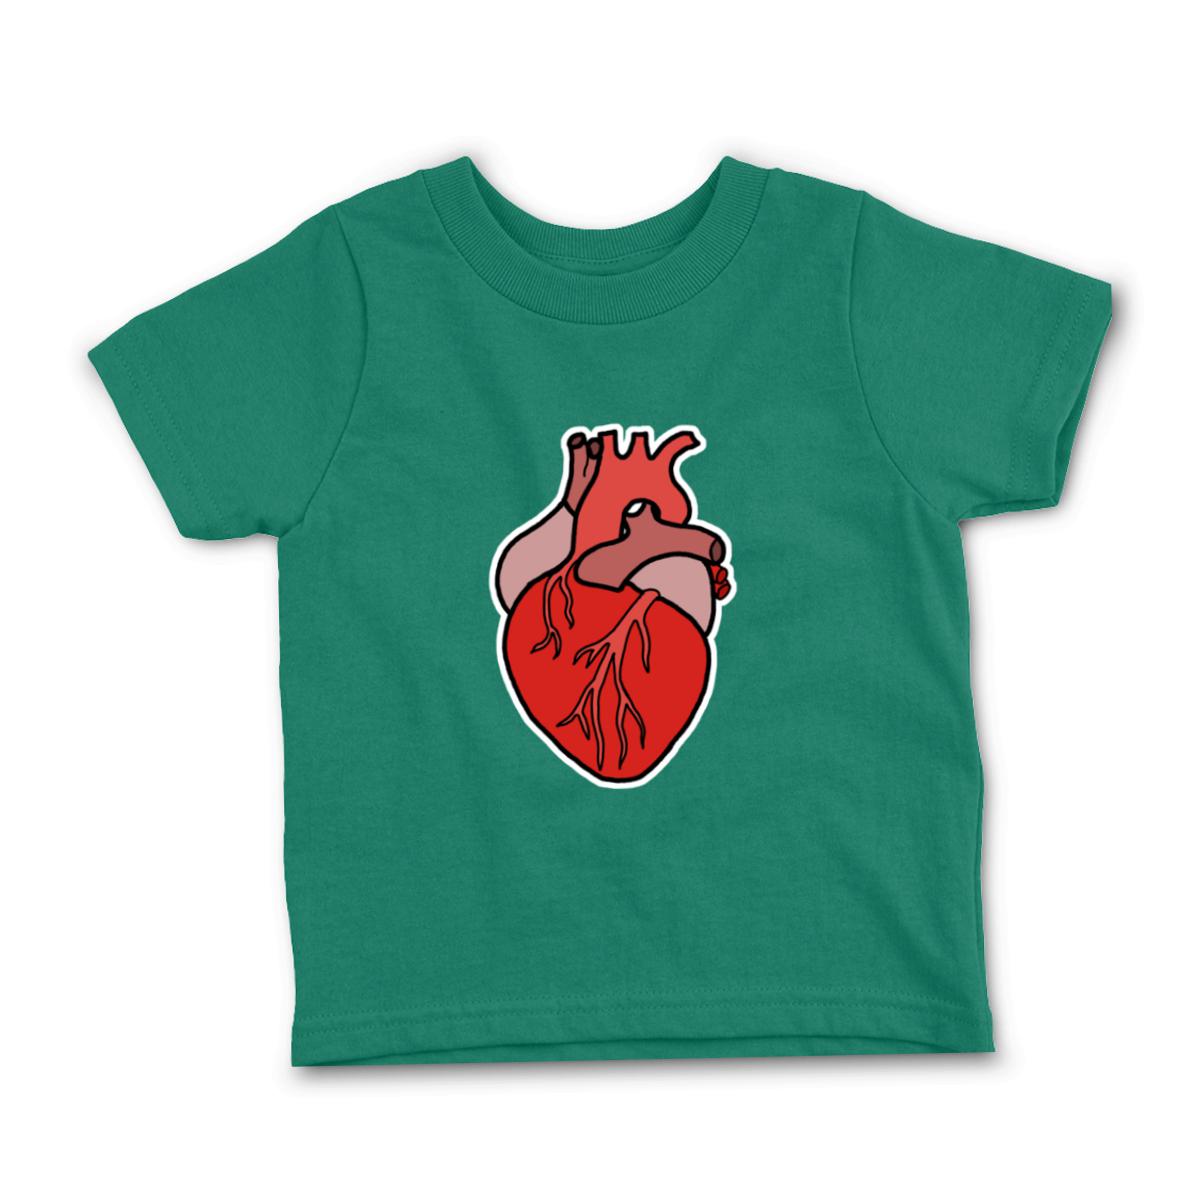 Illustrative Heart Infant Tee 24M kelly